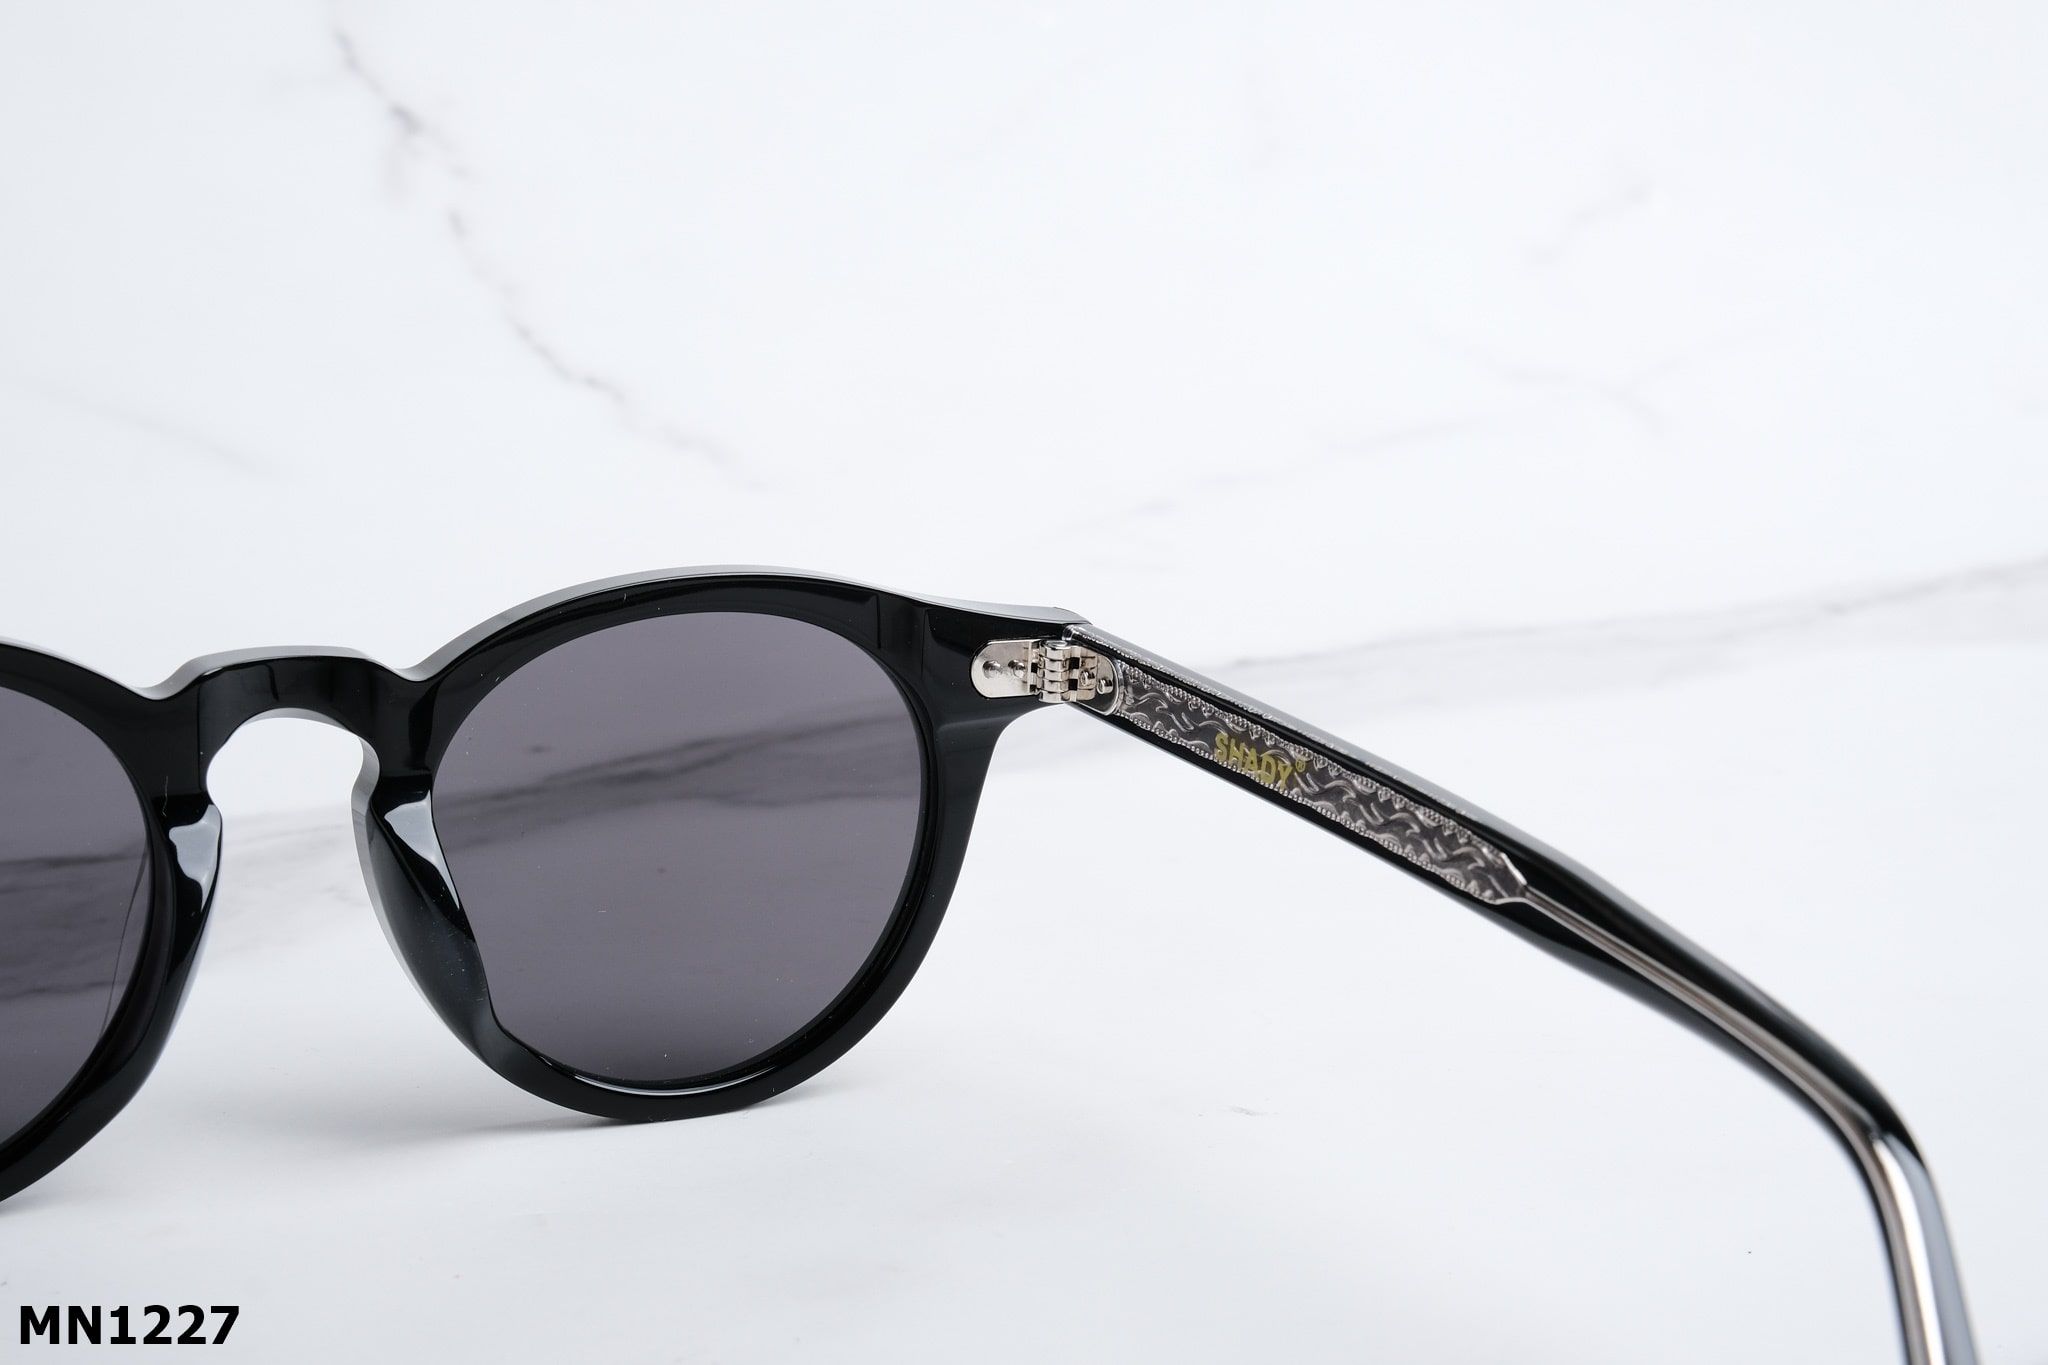  SHADY Eyewear - Sunglasses - MN1227 